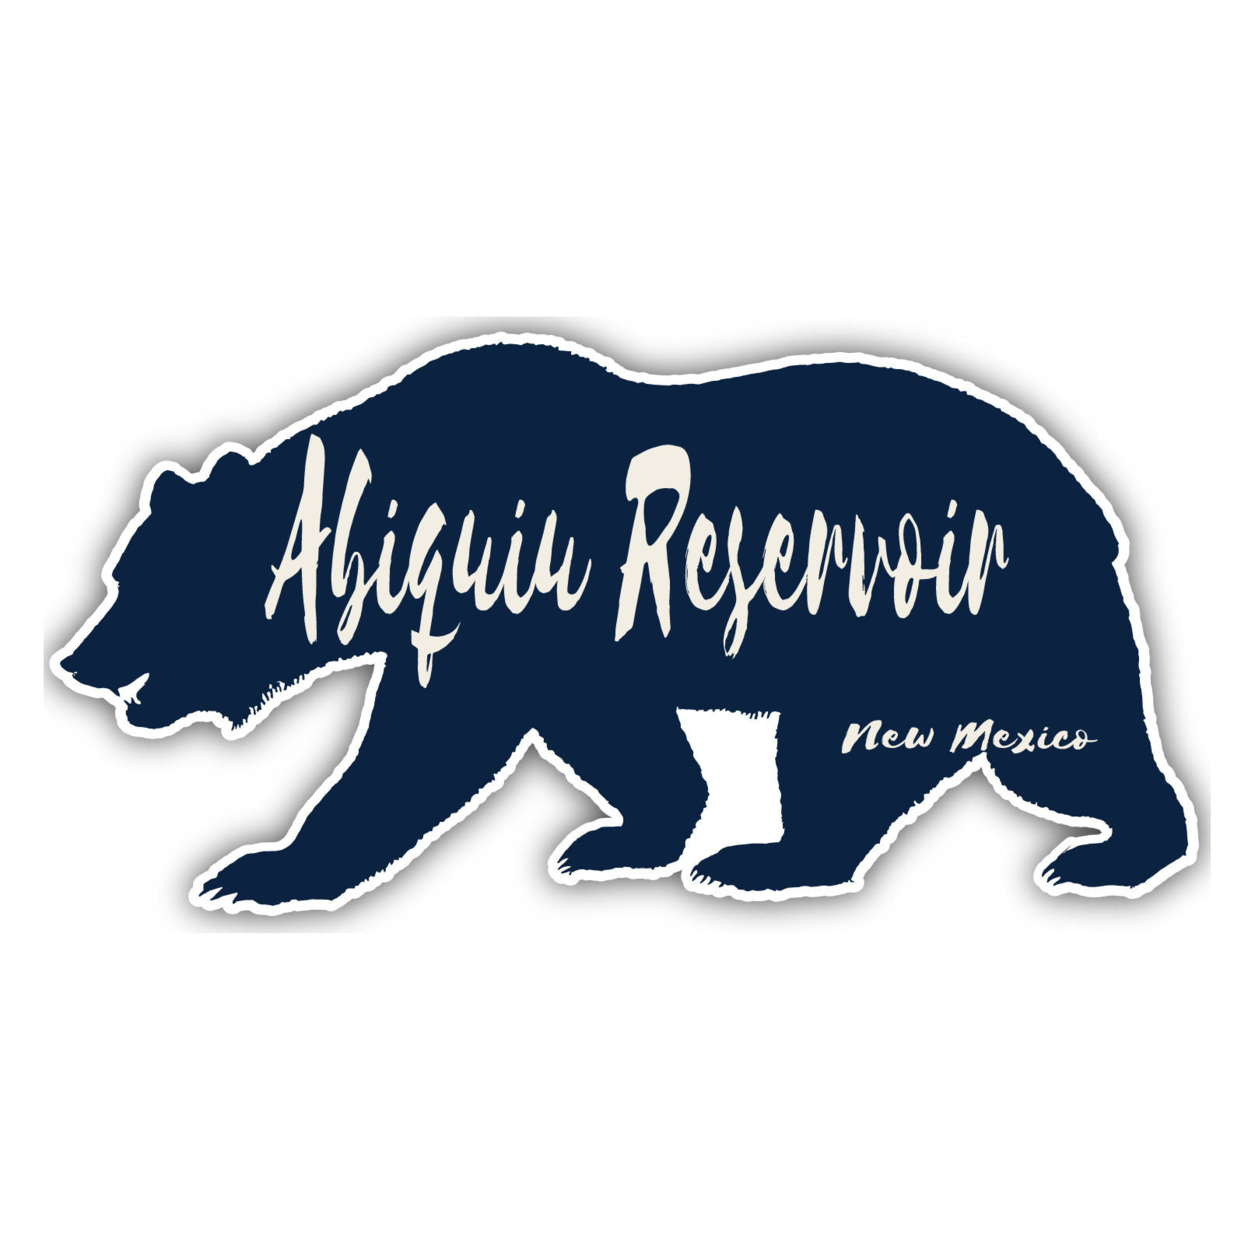 Abiquiu Reservoir New Mexico Souvenir Decorative Stickers (Choose Theme And Size) - 4-Pack, 6-Inch, Bear